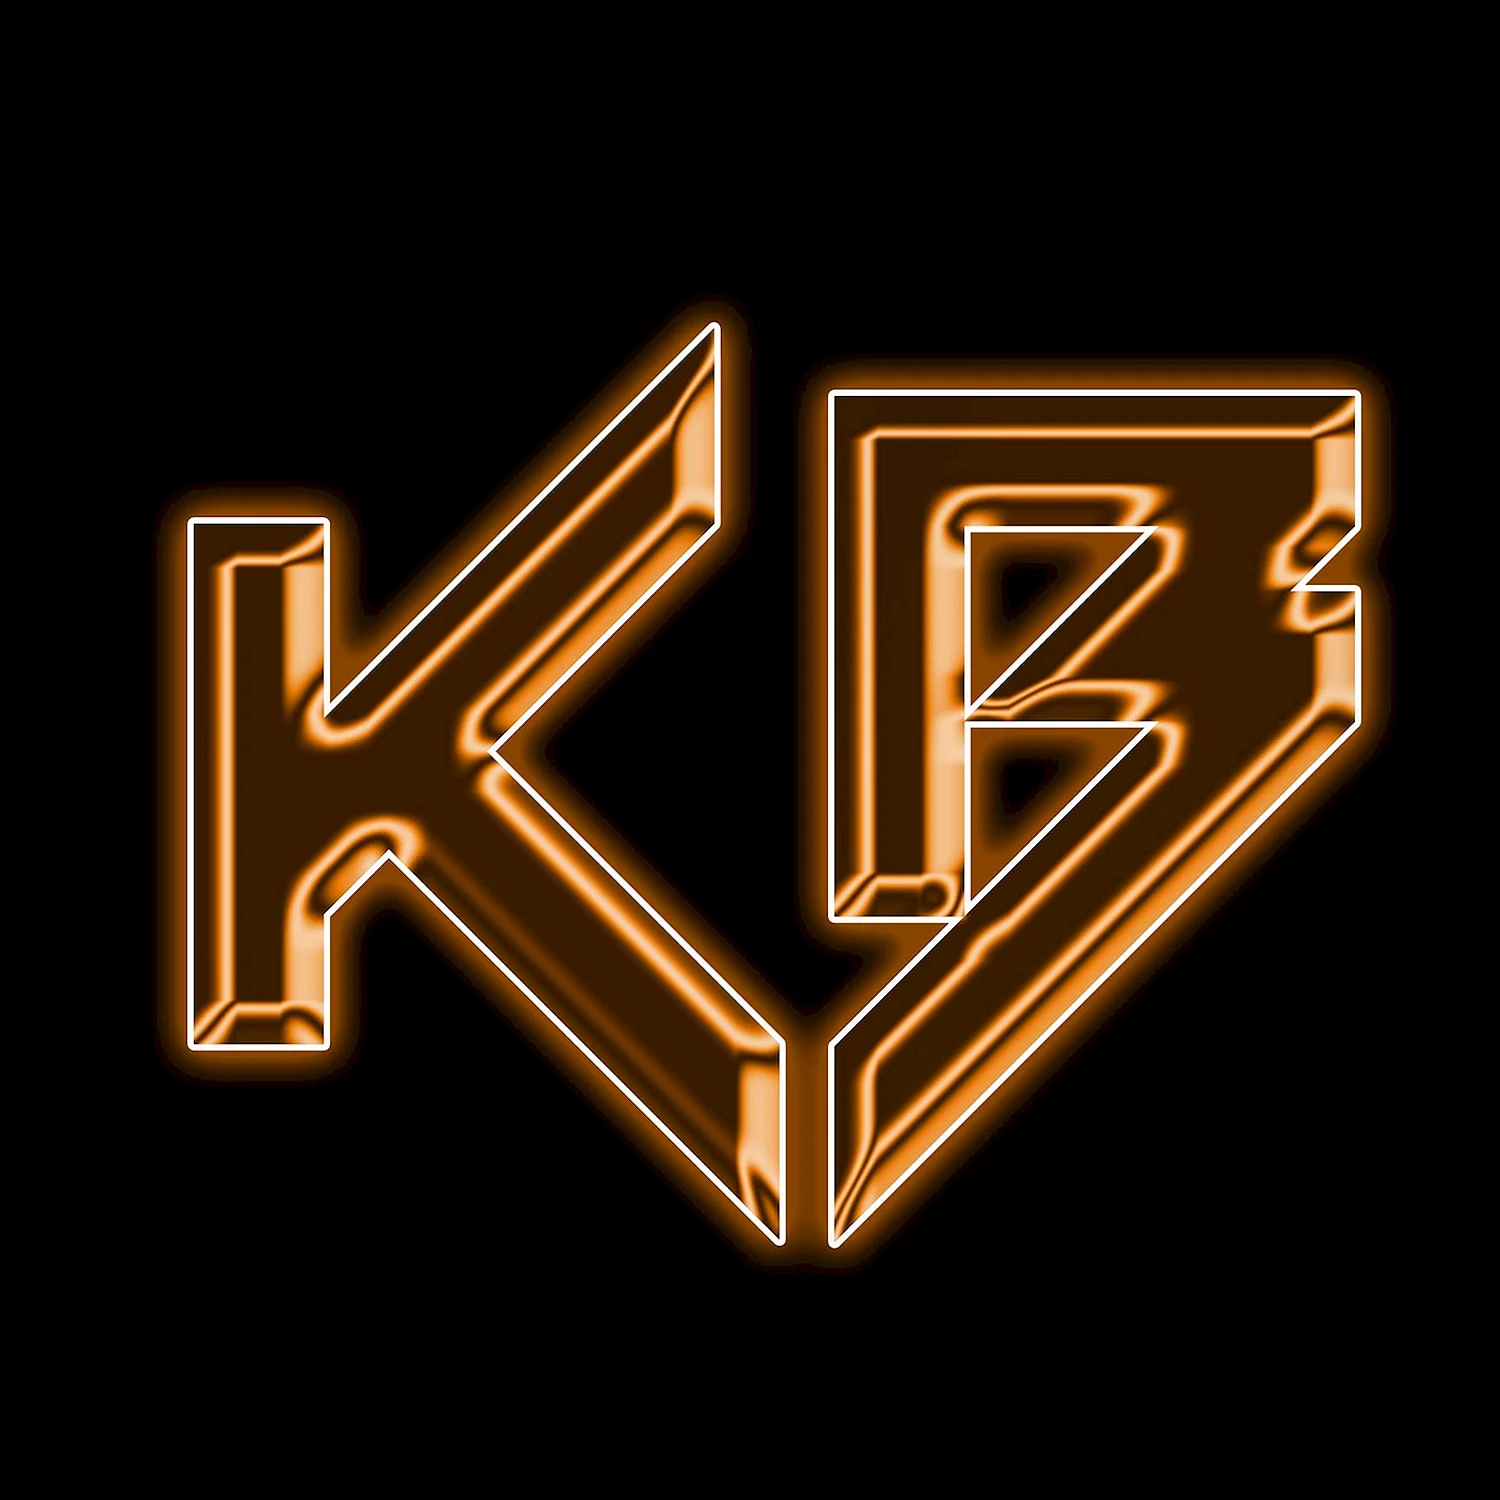 KB логотип